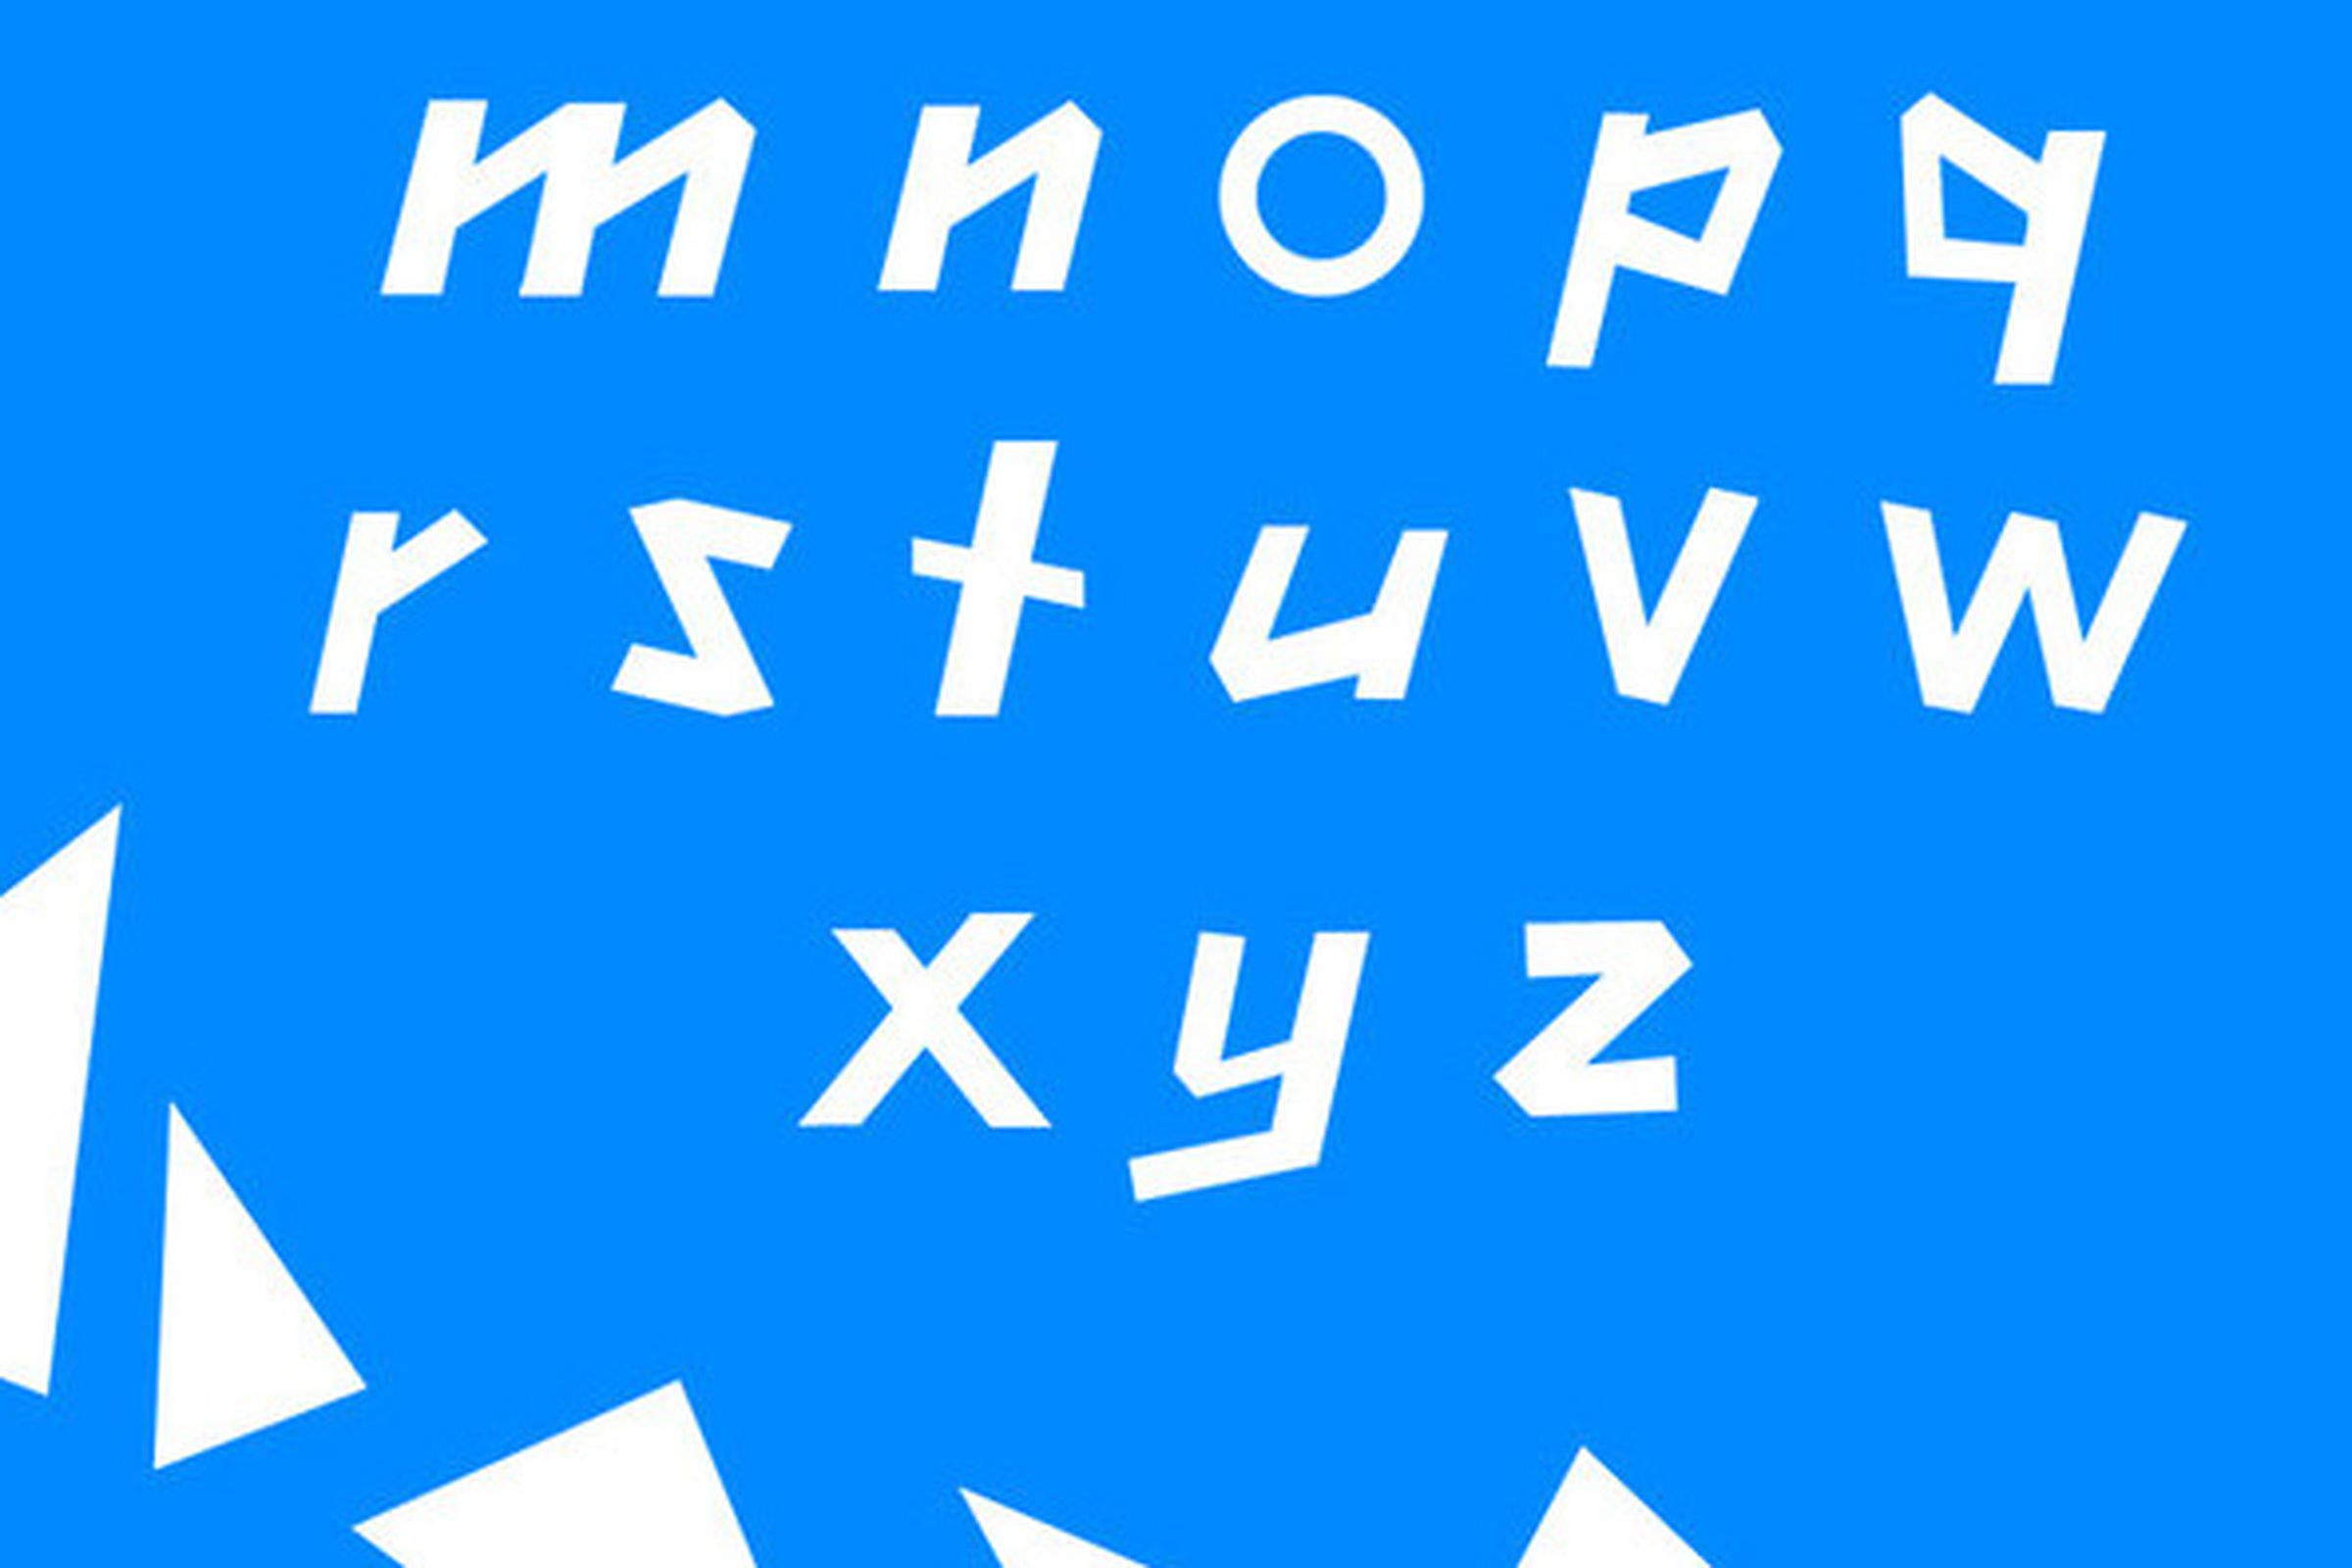 london 2012 typeface